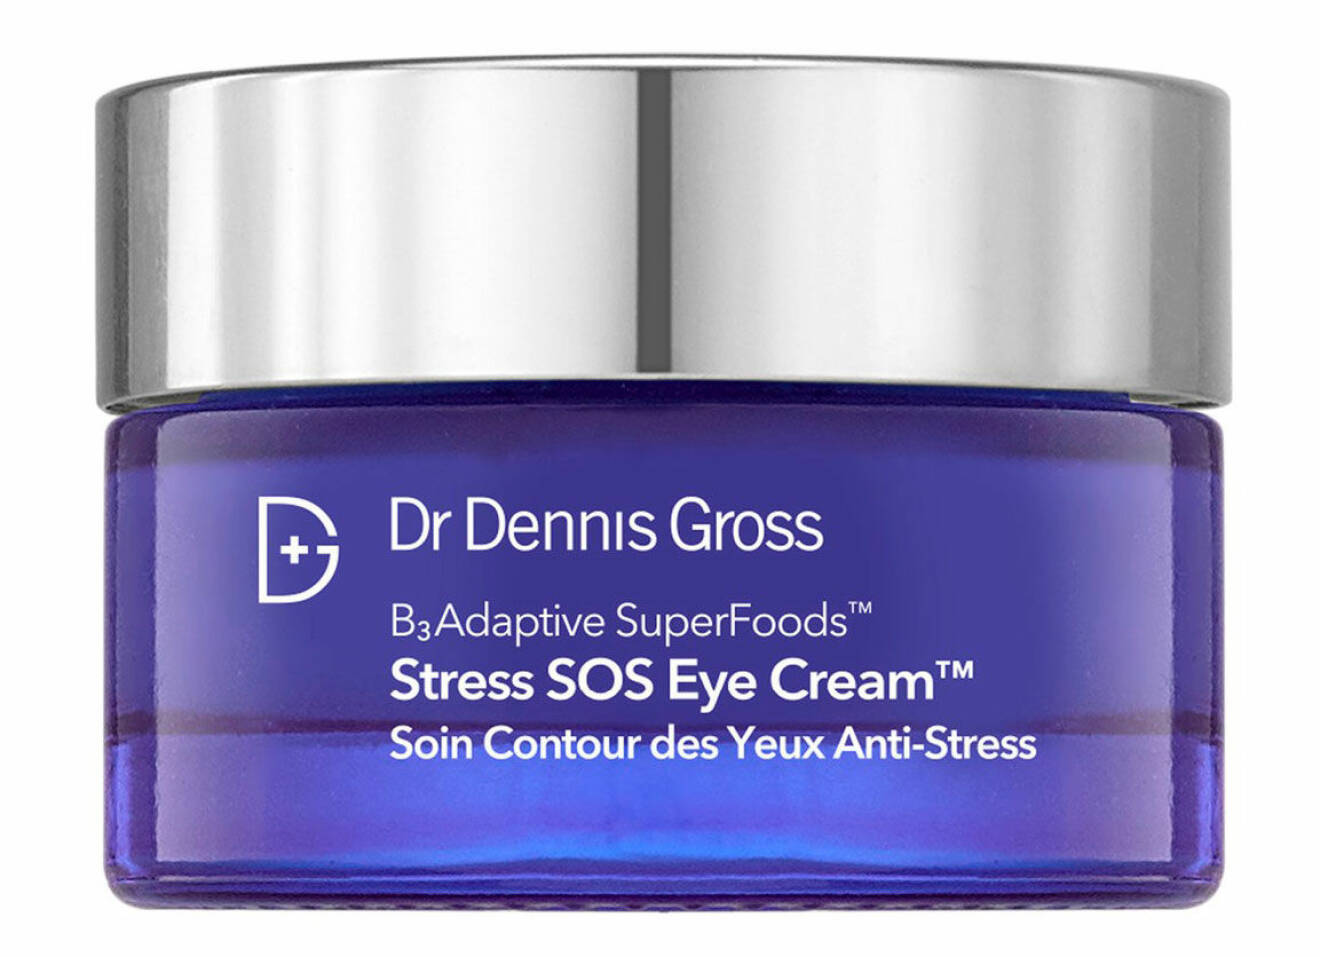 Stress SOS Eye Cream, Dr Dennis Gross.